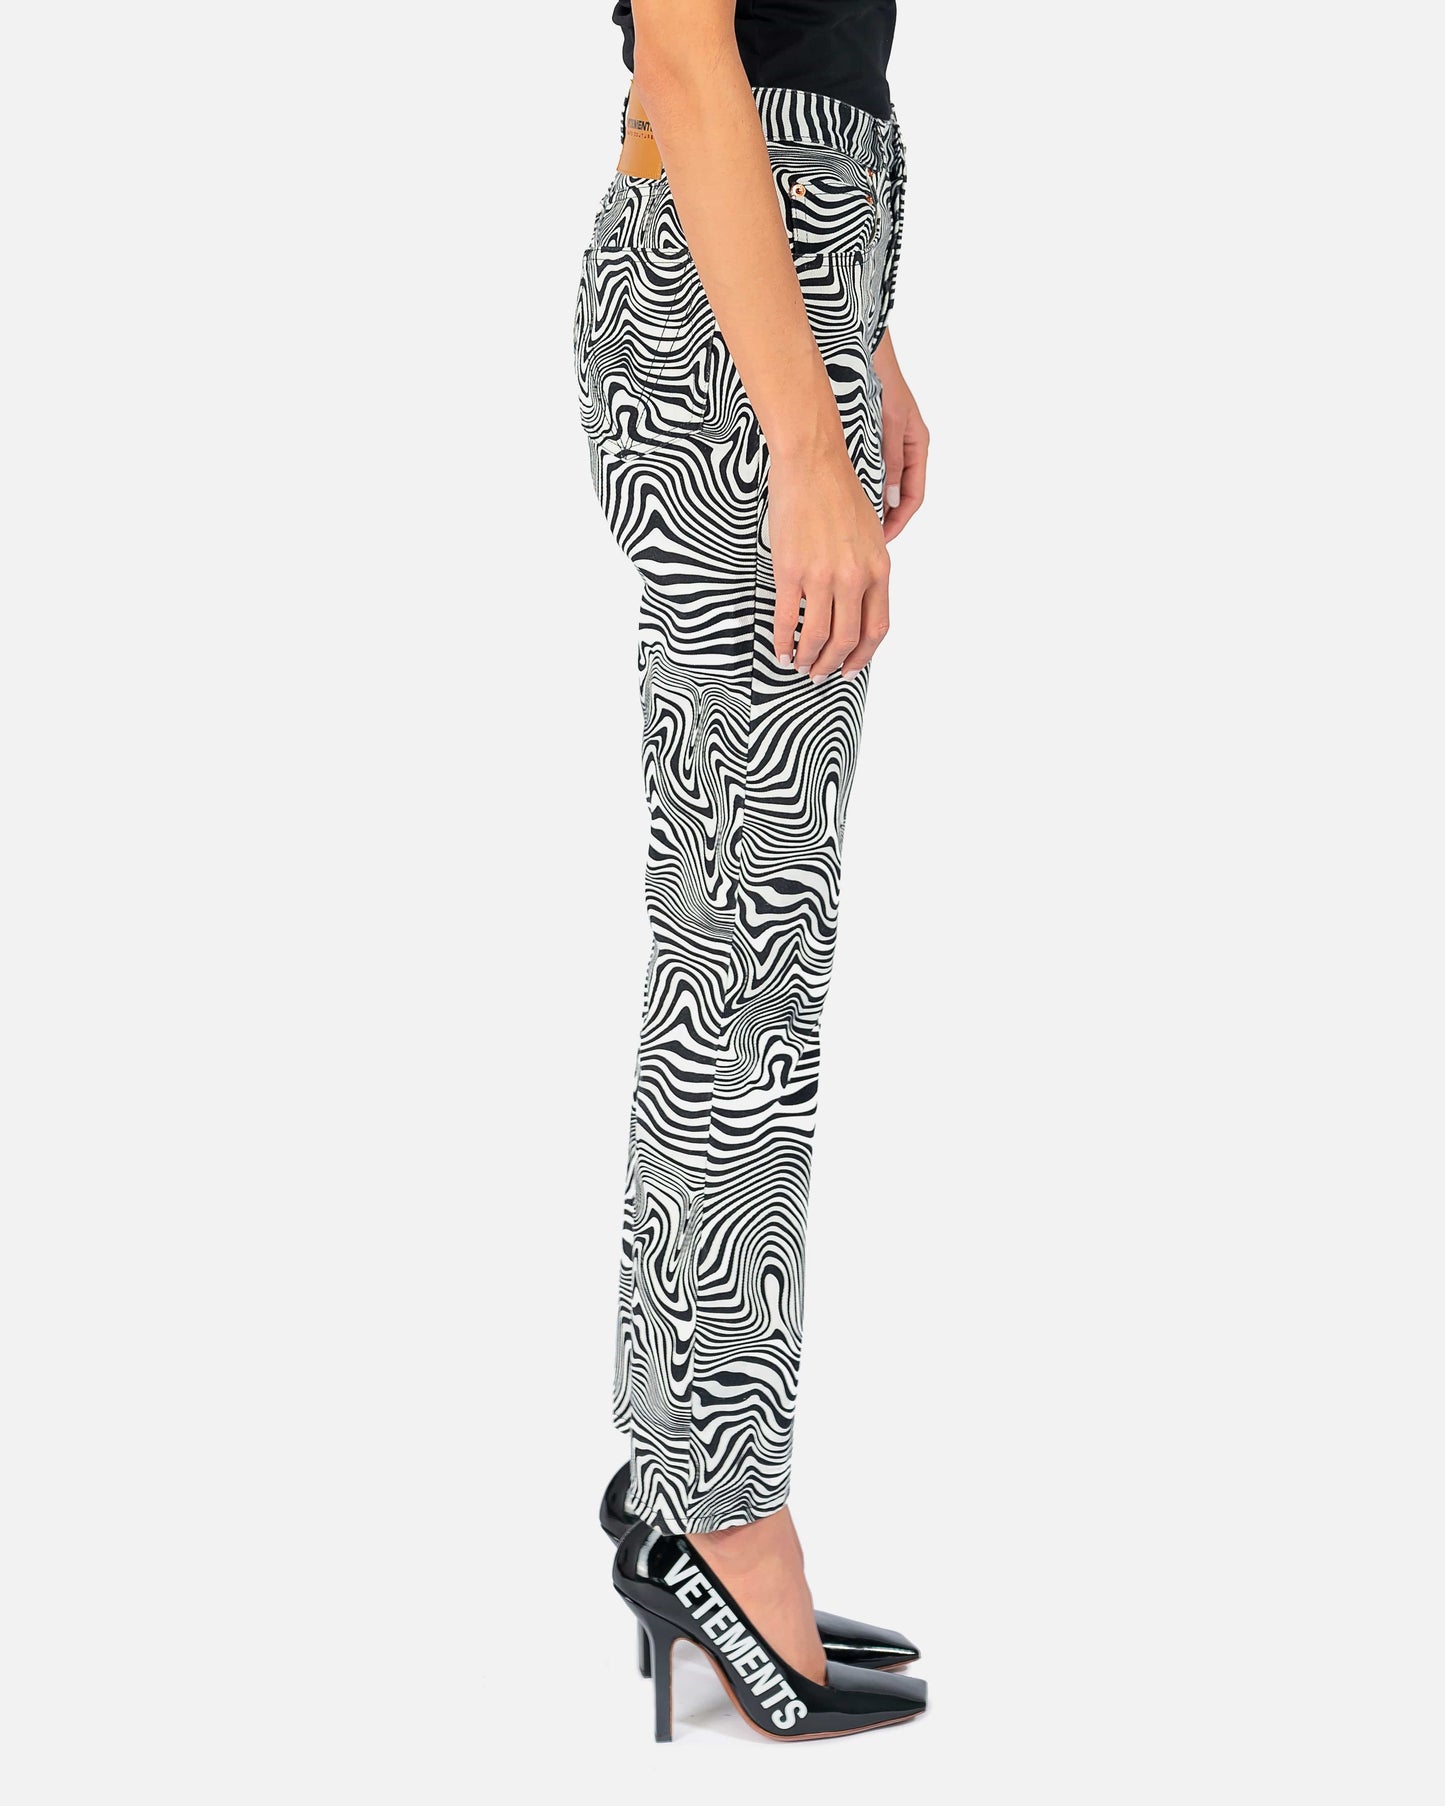 VETEMENTS Women Pants Zebra Magic Fit Denim in Black/White